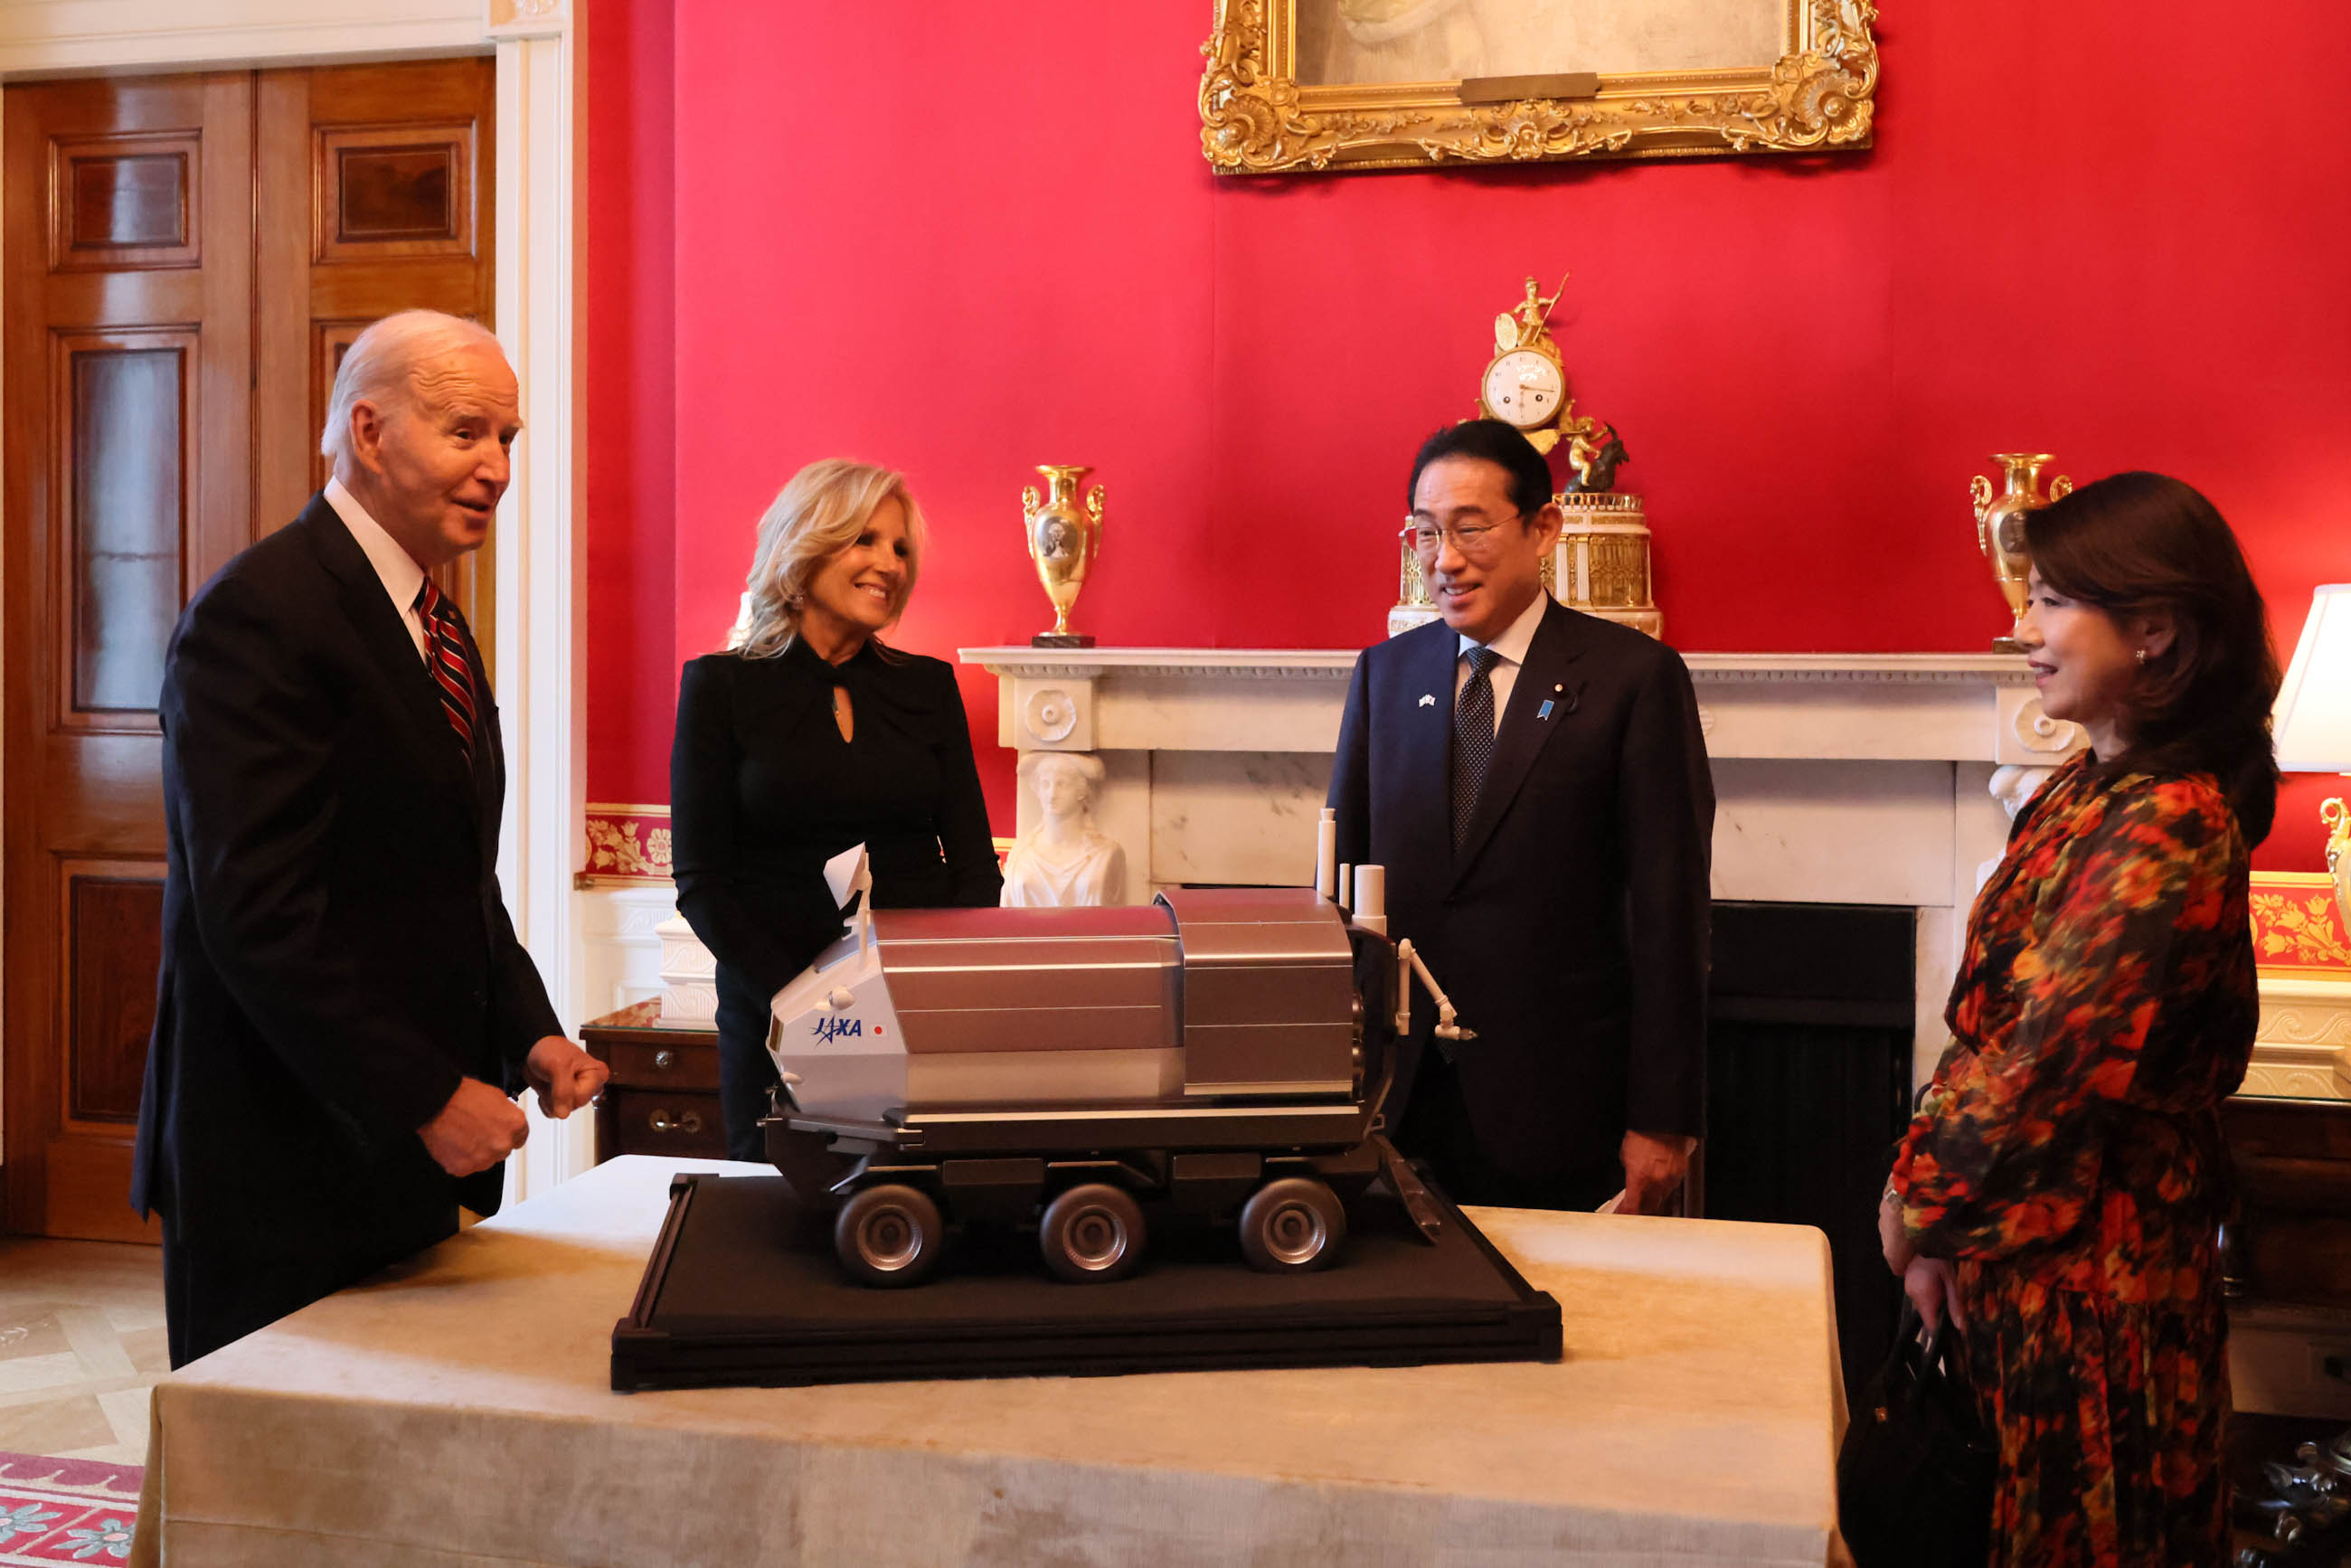 Event between Prime Minister Kishida, Mrs. Kishida, President Biden and Dr. Biden (4)